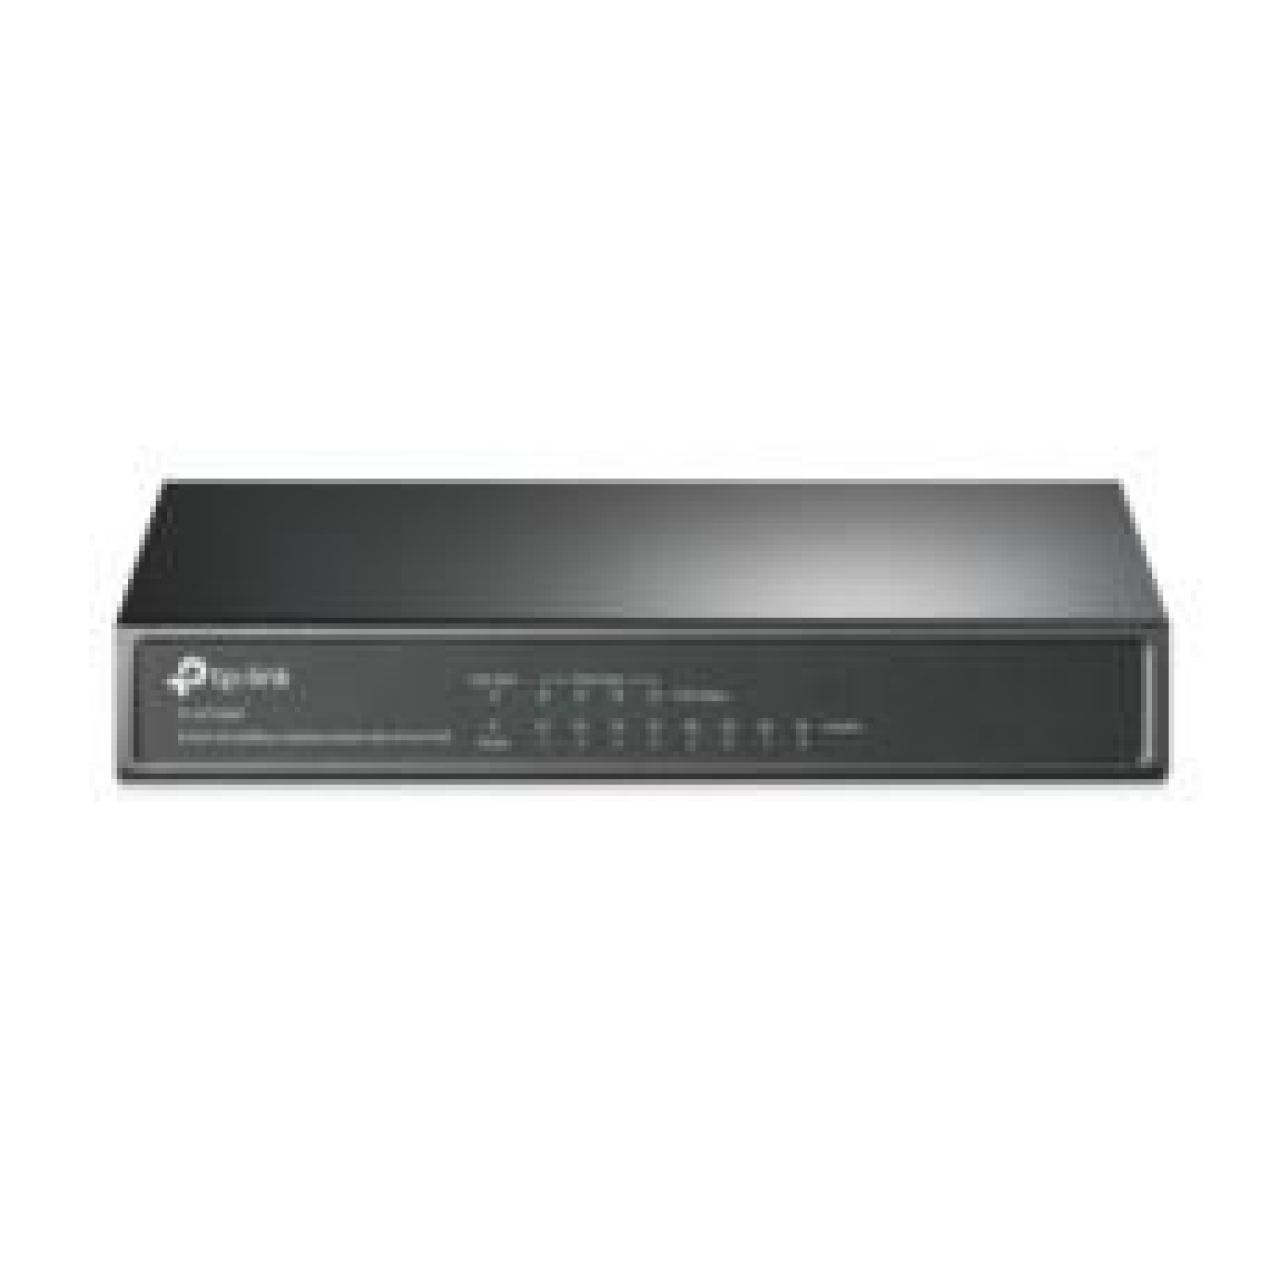 TP-LINK 8 Port 10/100Mbps PoE Switch TL-SF1008P